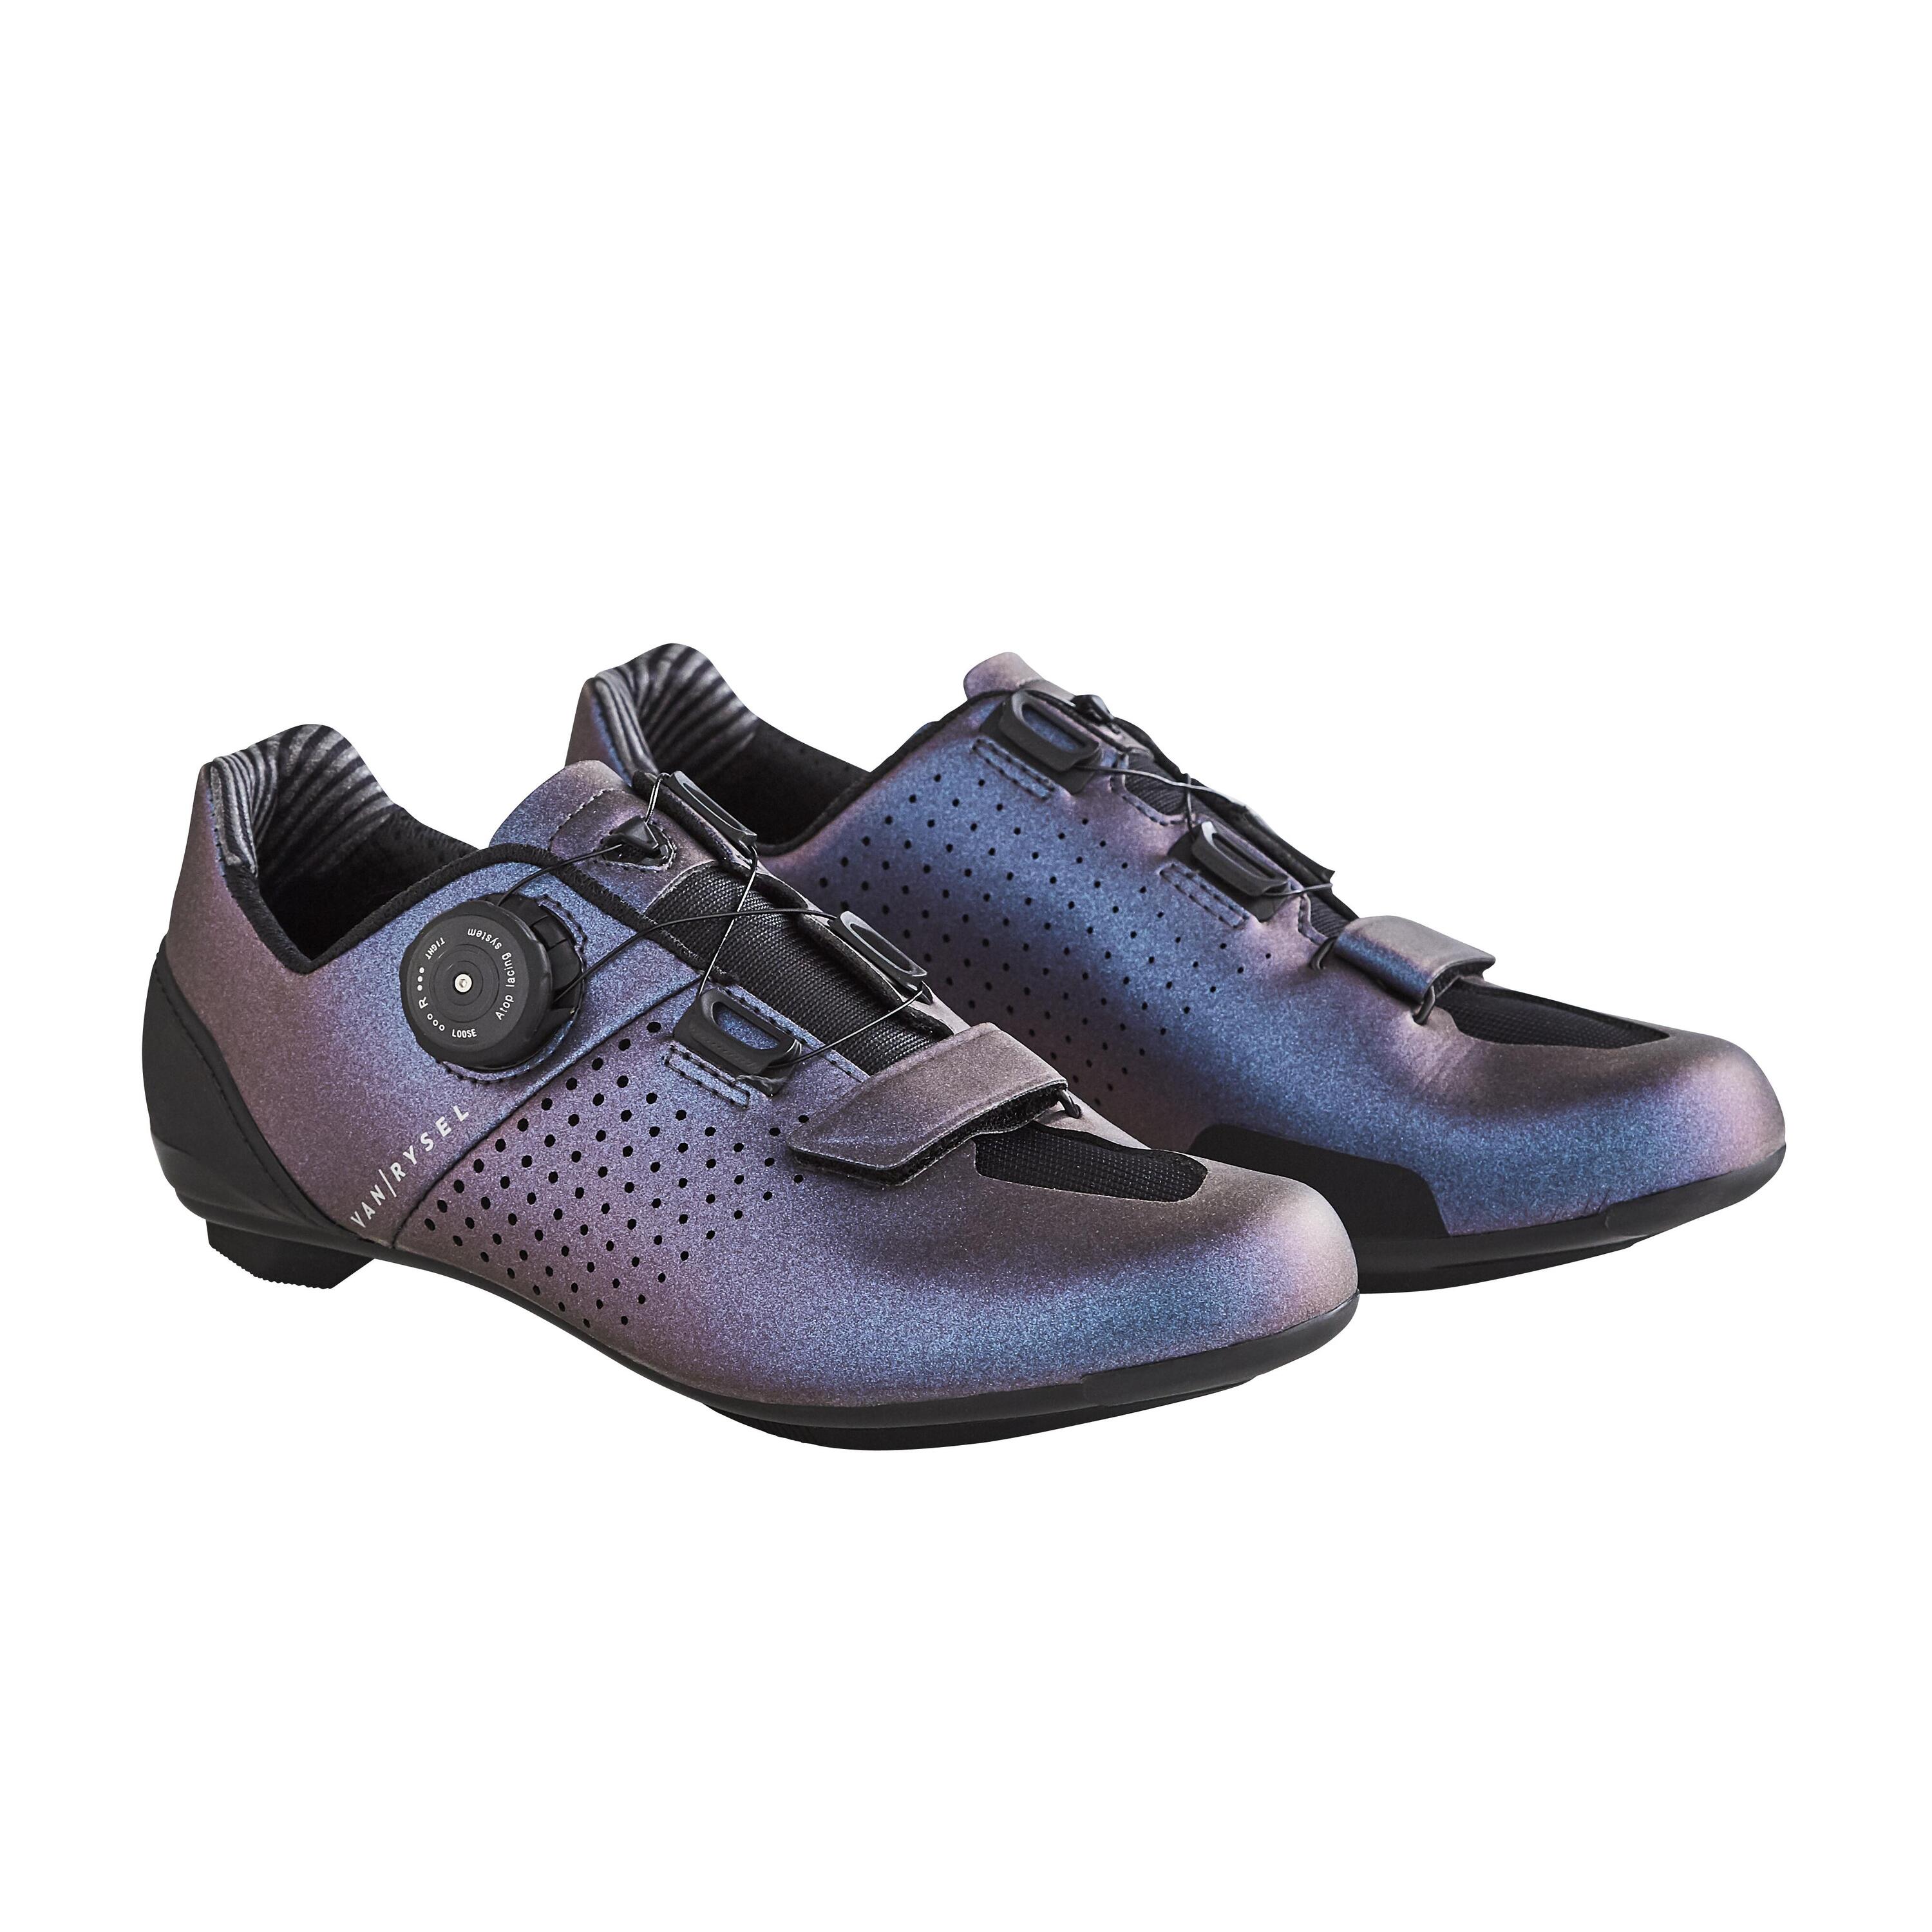 VAN RYSEL RoadR 520 Women's Carbon Road Cycling Shoes - Iridescent Purple